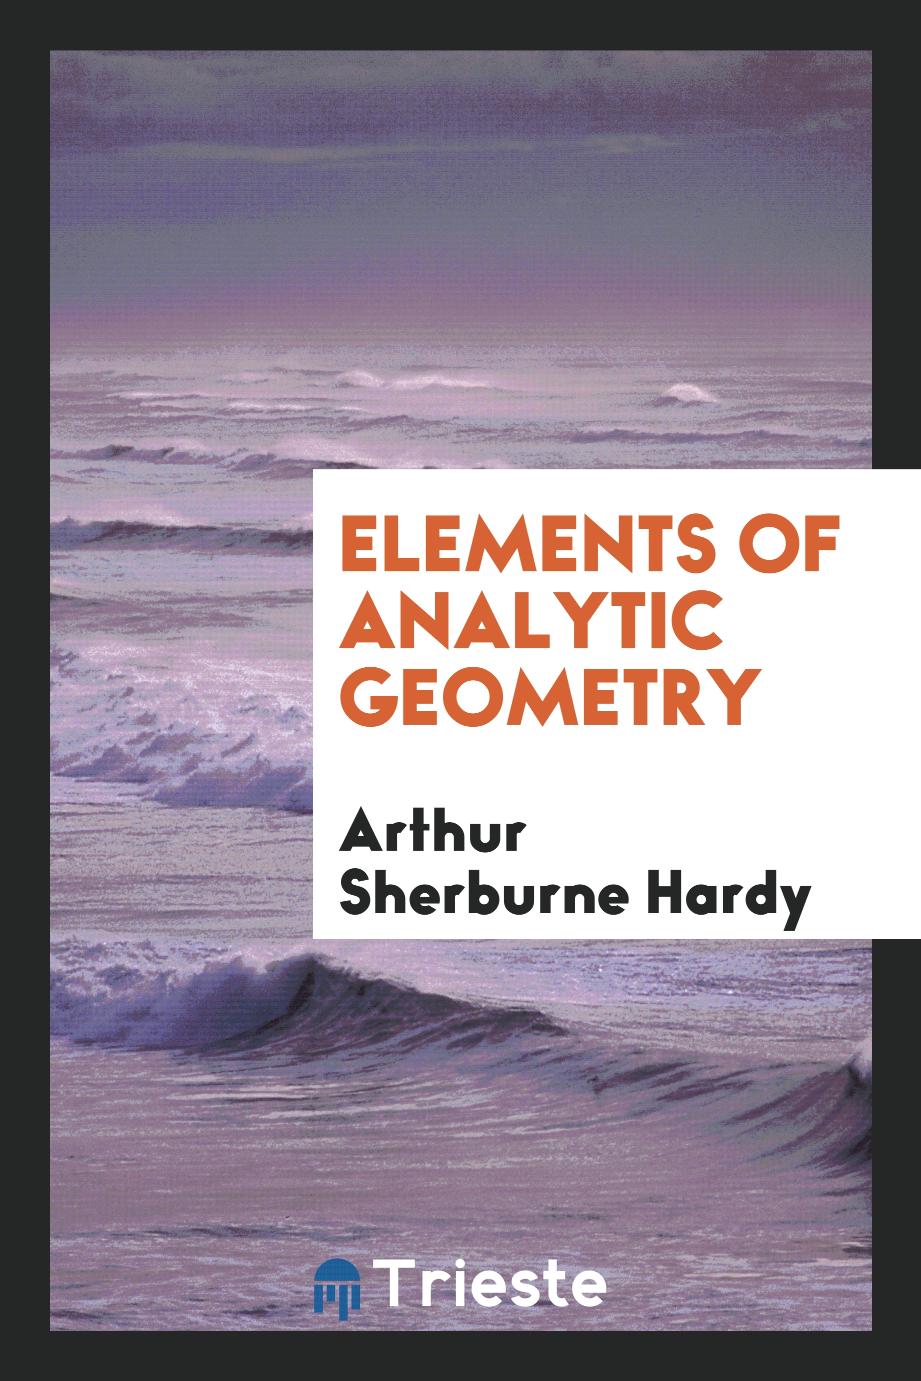 Arthur Sherburne Hardy - Elements of Analytic Geometry